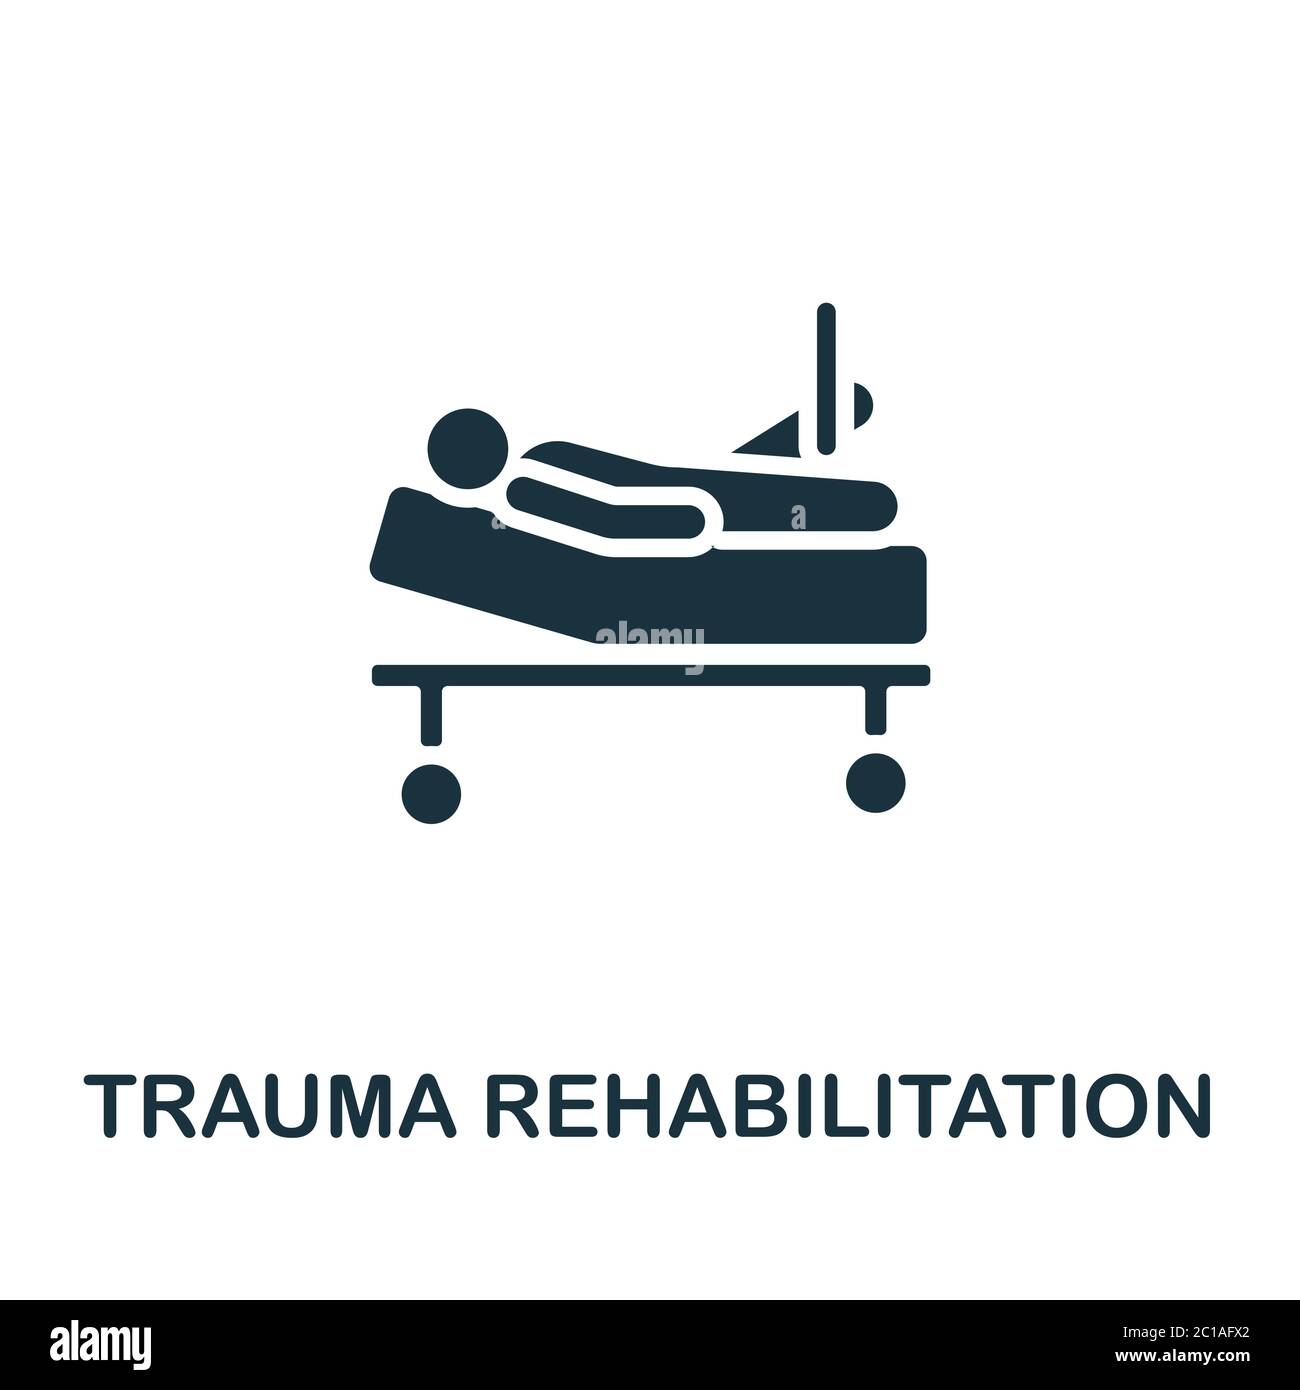 Symbol für Trauma Rehabilitation. Monochrom Simple Trauma Rehabilitation Icon für Vorlagen, Webdesign und Infografiken Stock Vektor